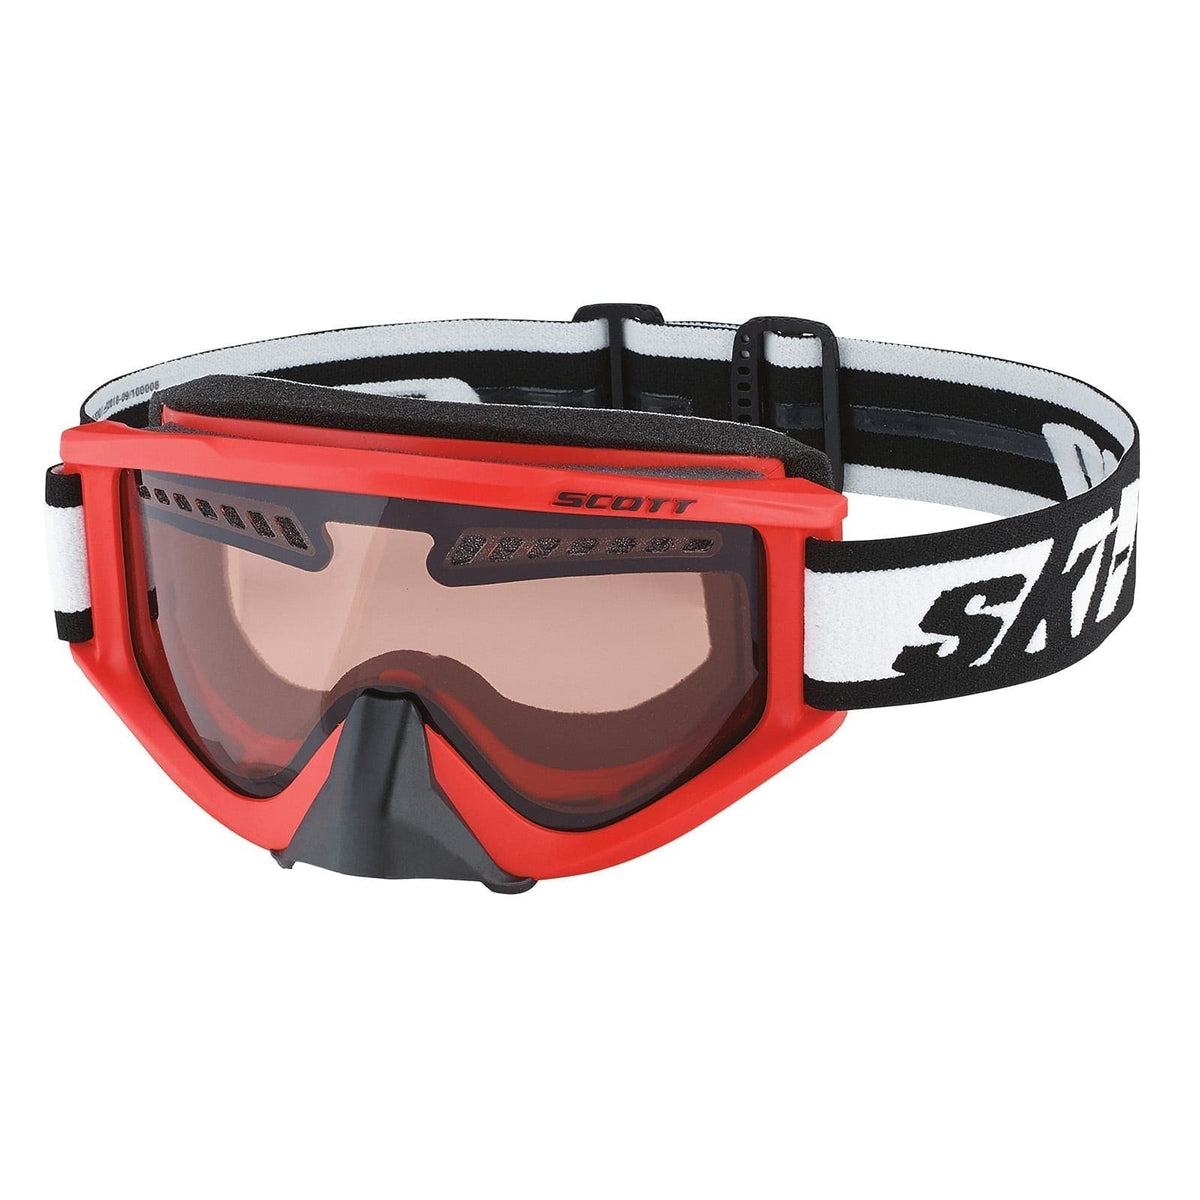 Ski-Doo Trail Goggles by Scott / Red / Onesize